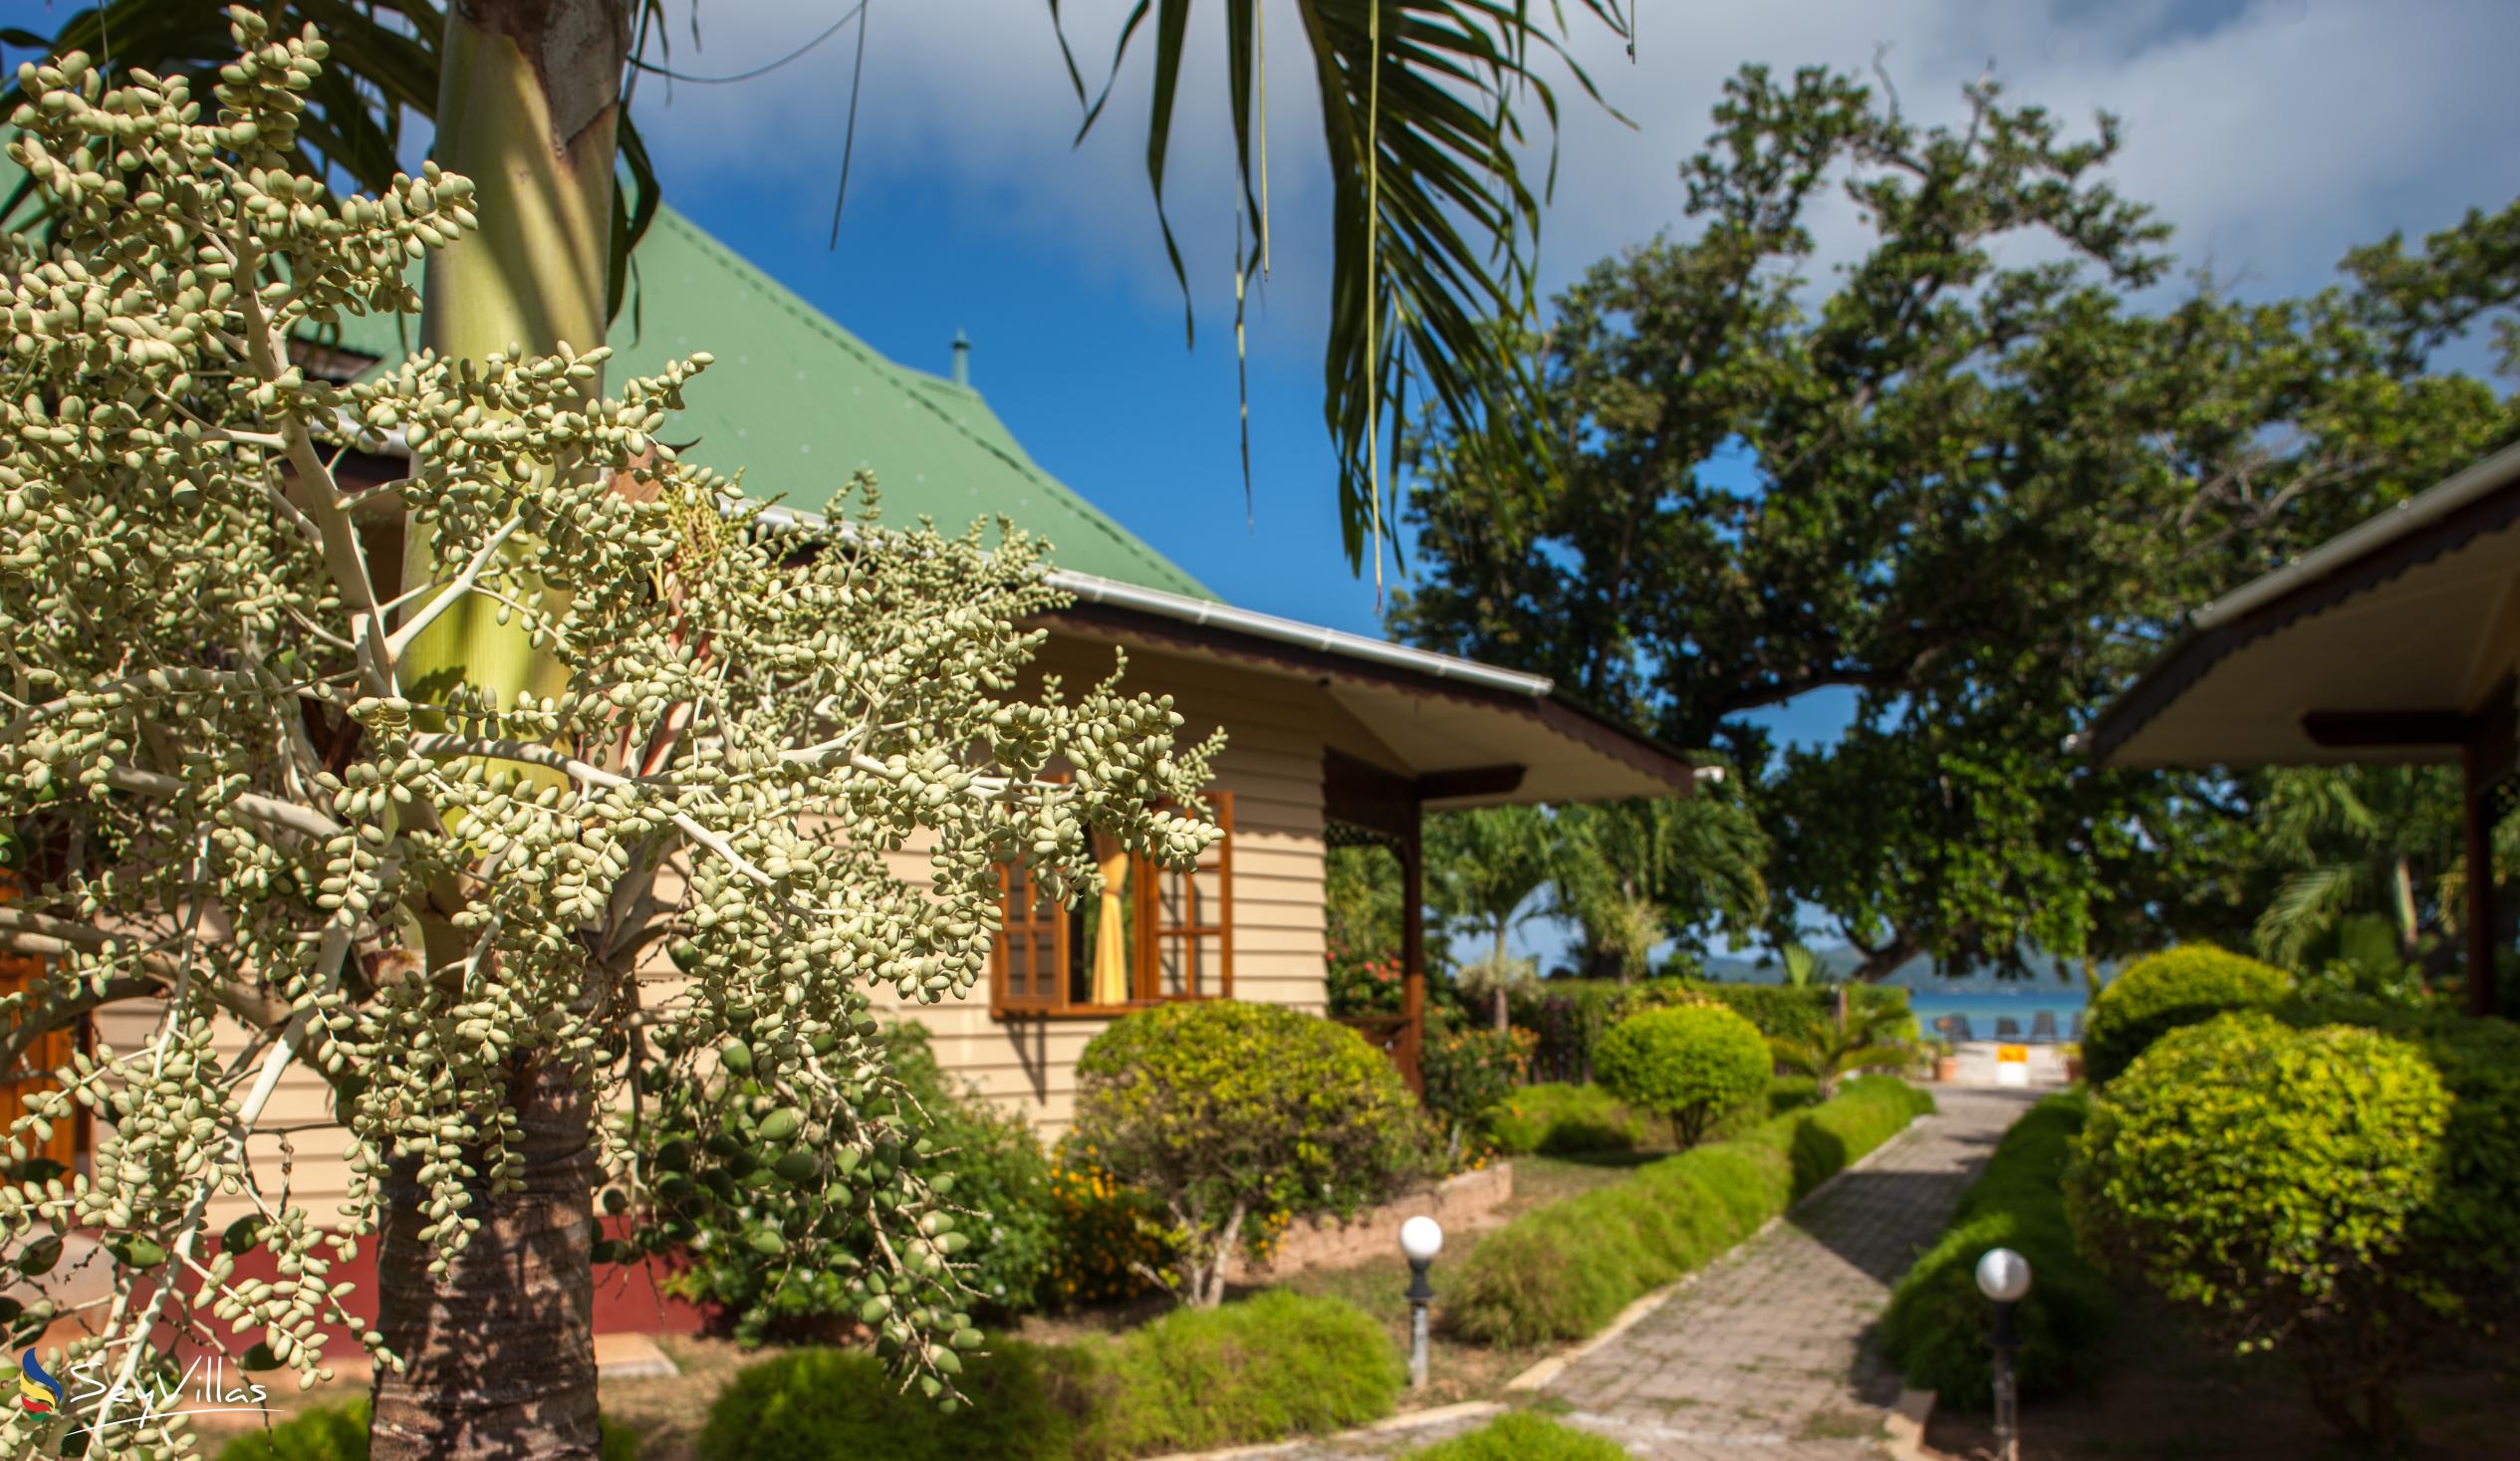 Foto 7: Villa Creole - Aussenbereich - La Digue (Seychellen)